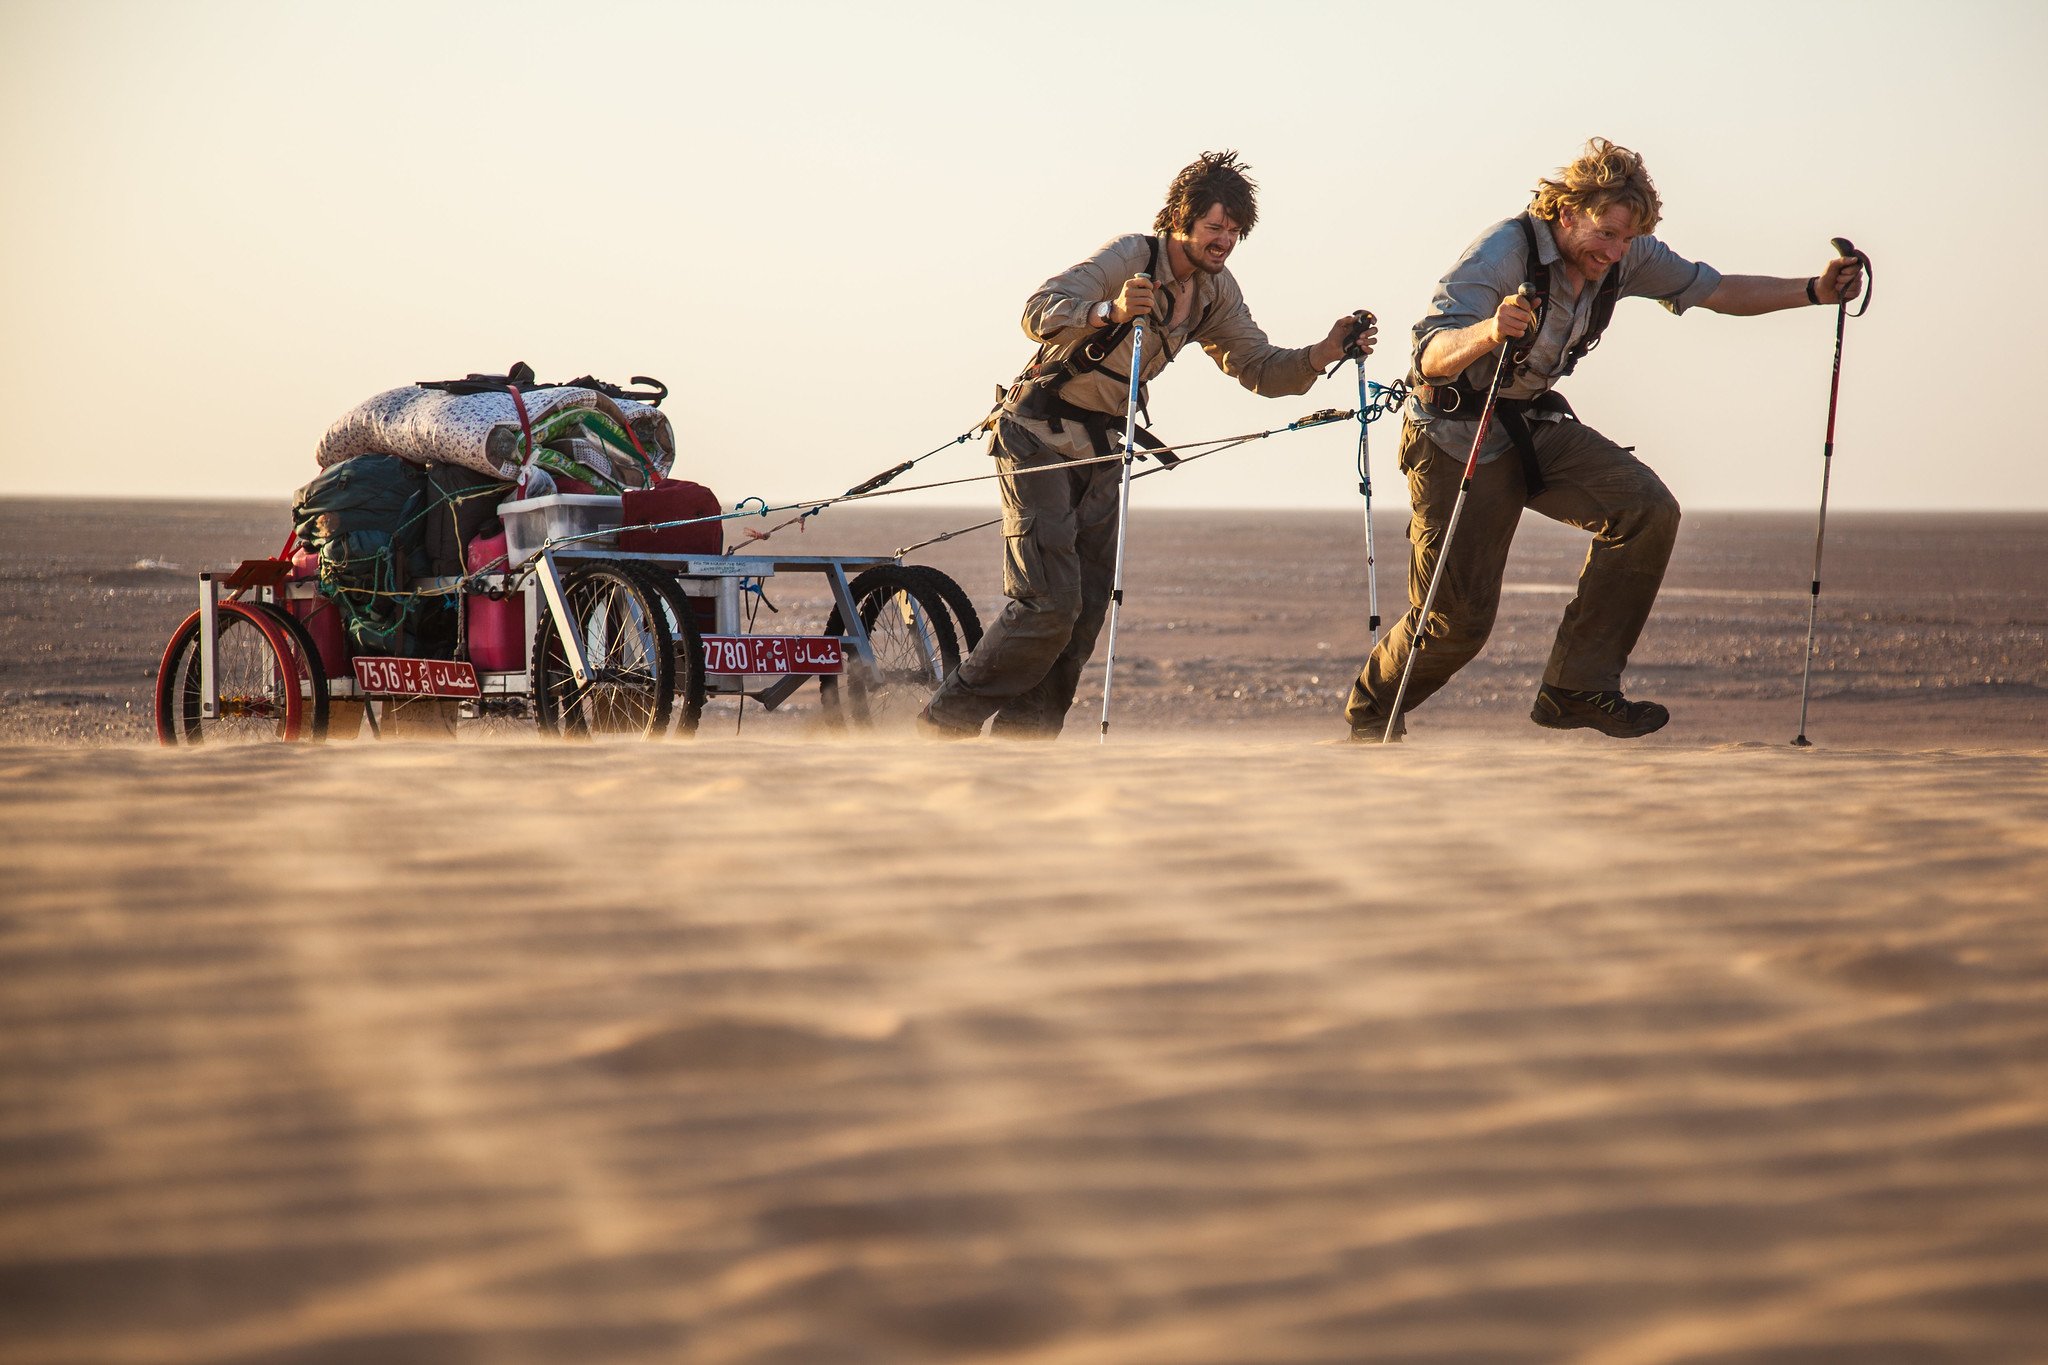 Alastair Humphreys and Leon McCarron pulling a cart across the Empty Quarter desert | Photo: Alastair Humphreys